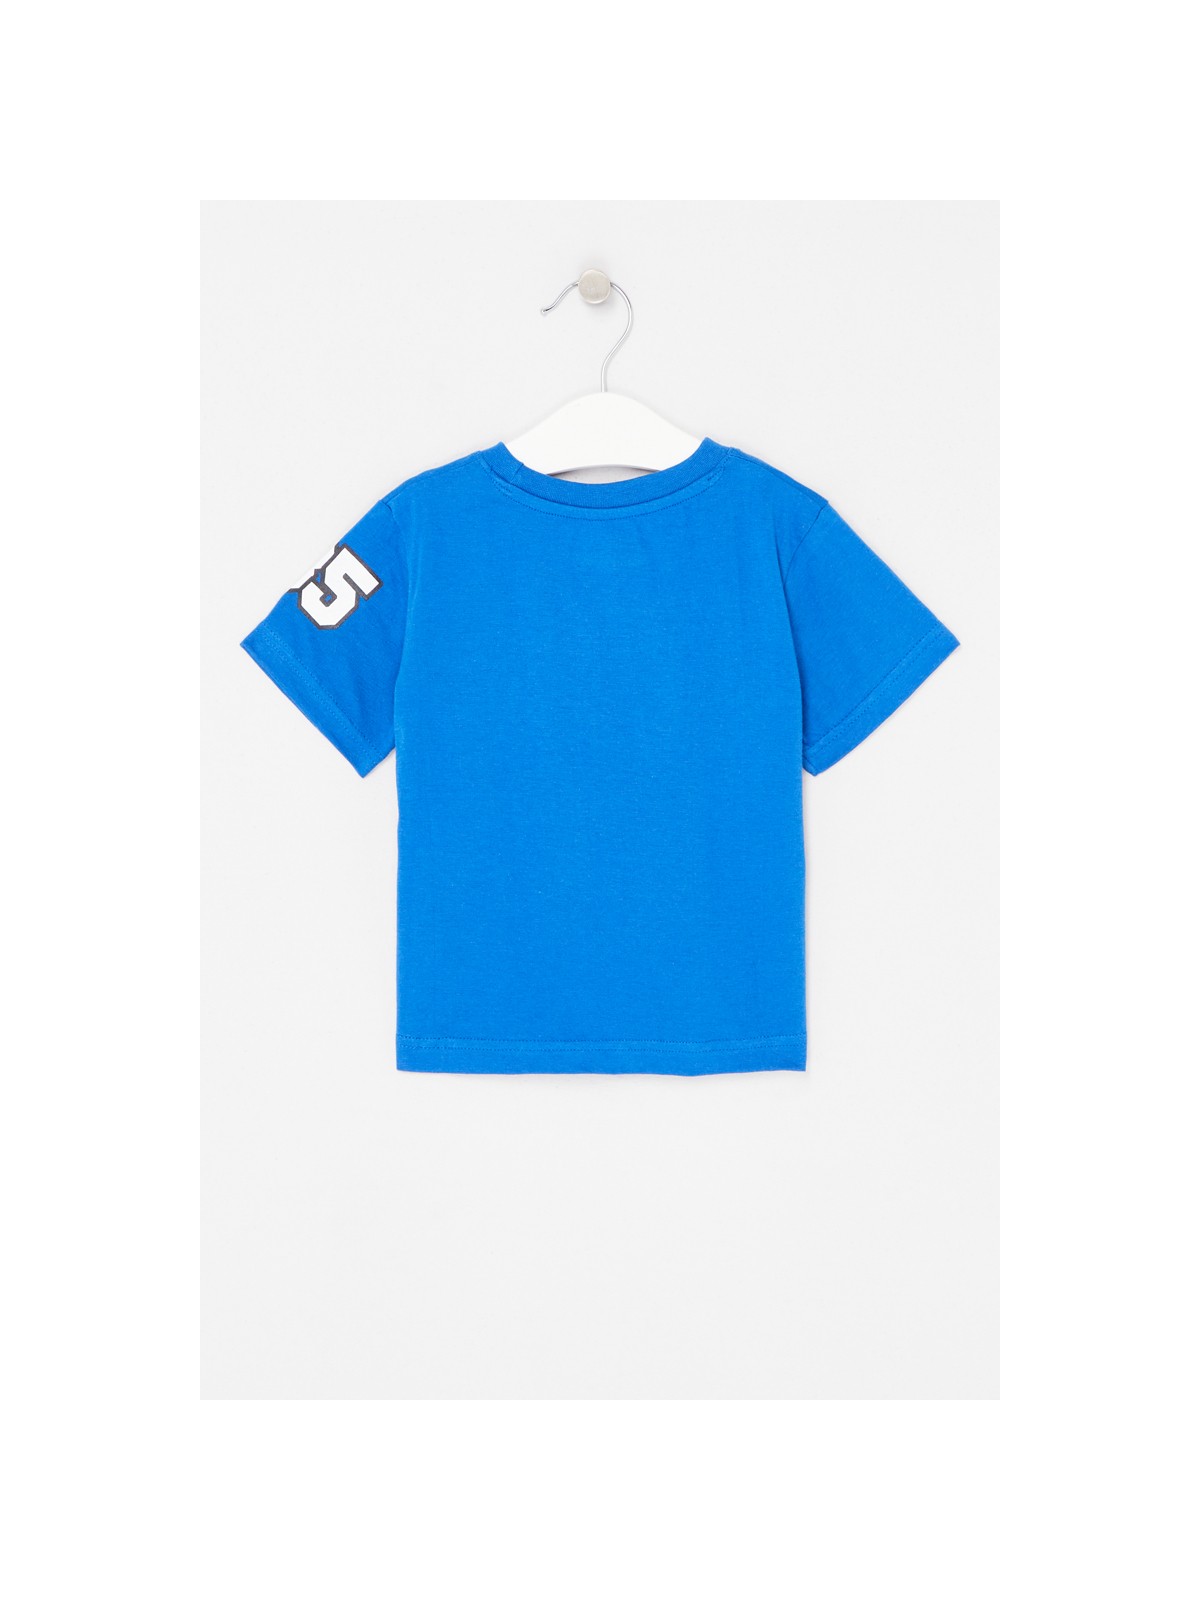 Super Mario T-shirt short sleeves